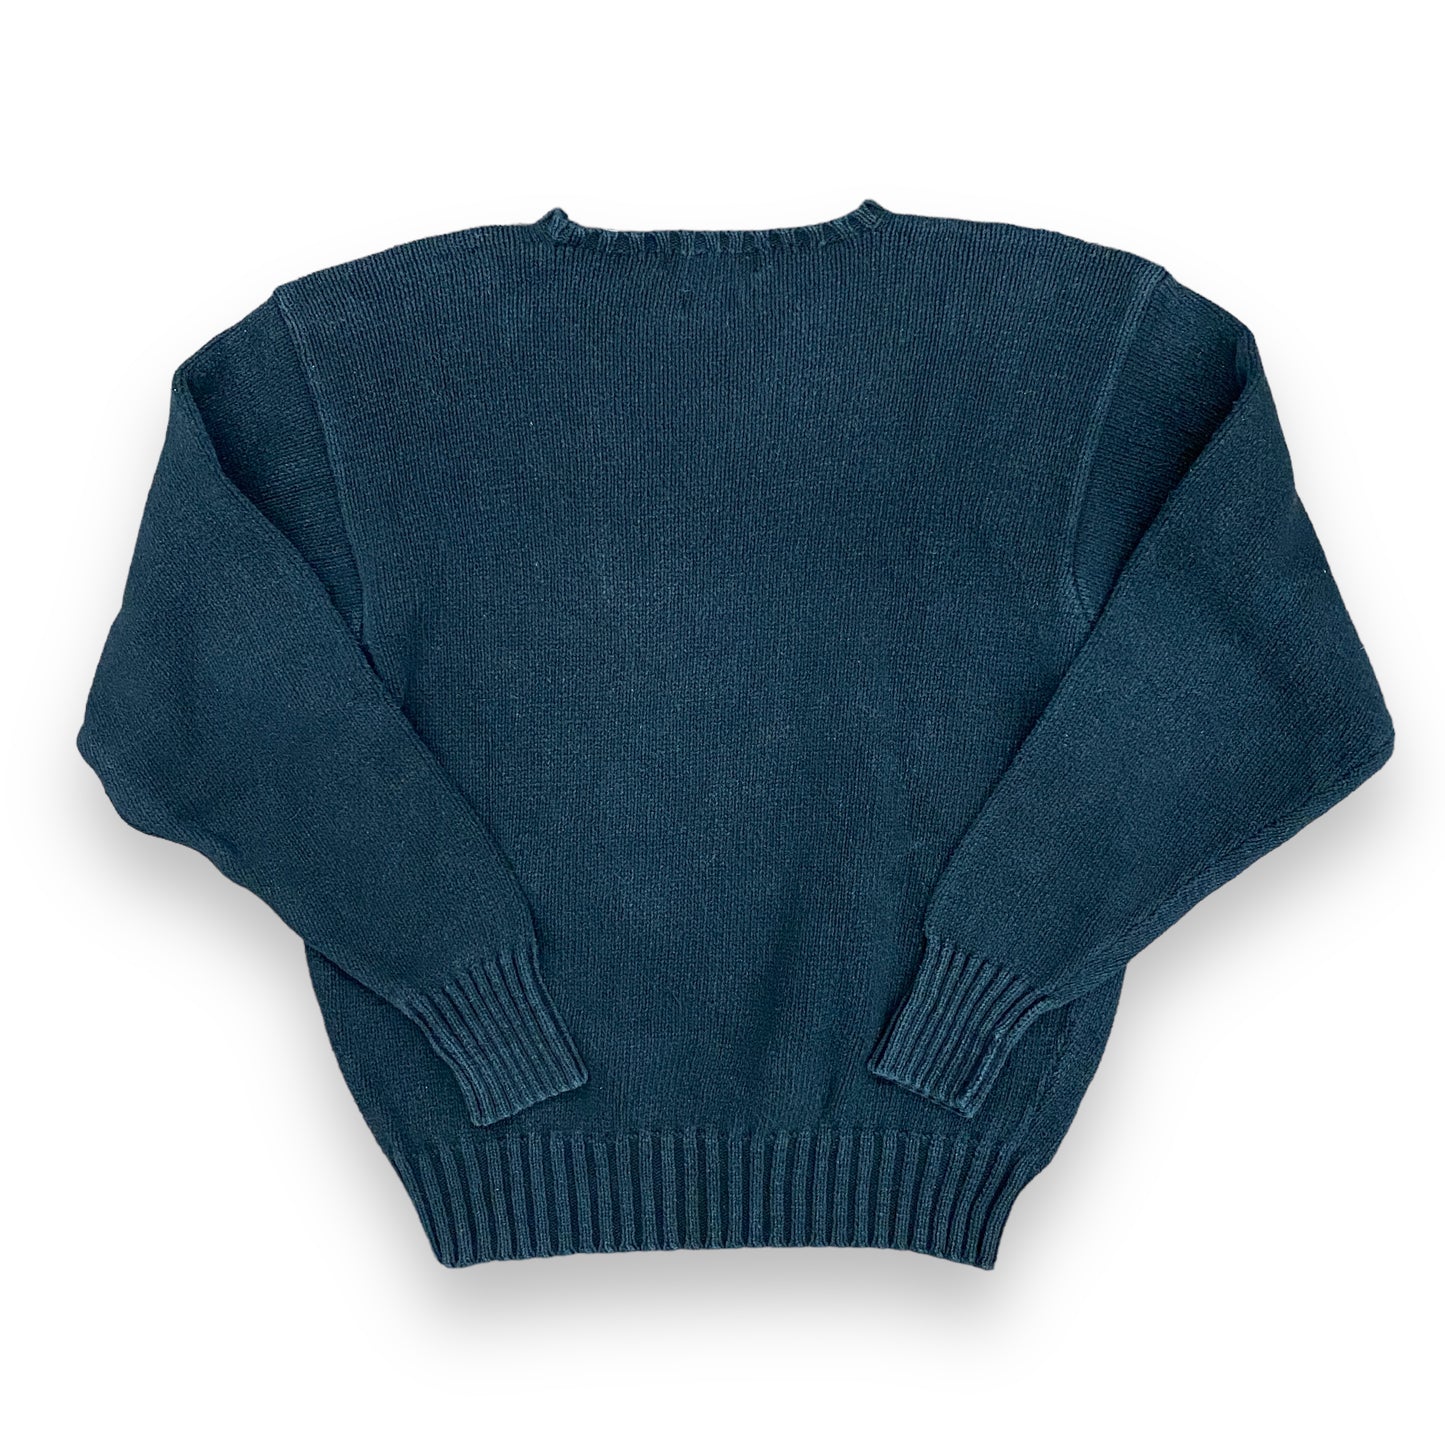 Polo by Ralph Lauren 100% Cotton Knit Sweater - Size XXL (Fits XL)